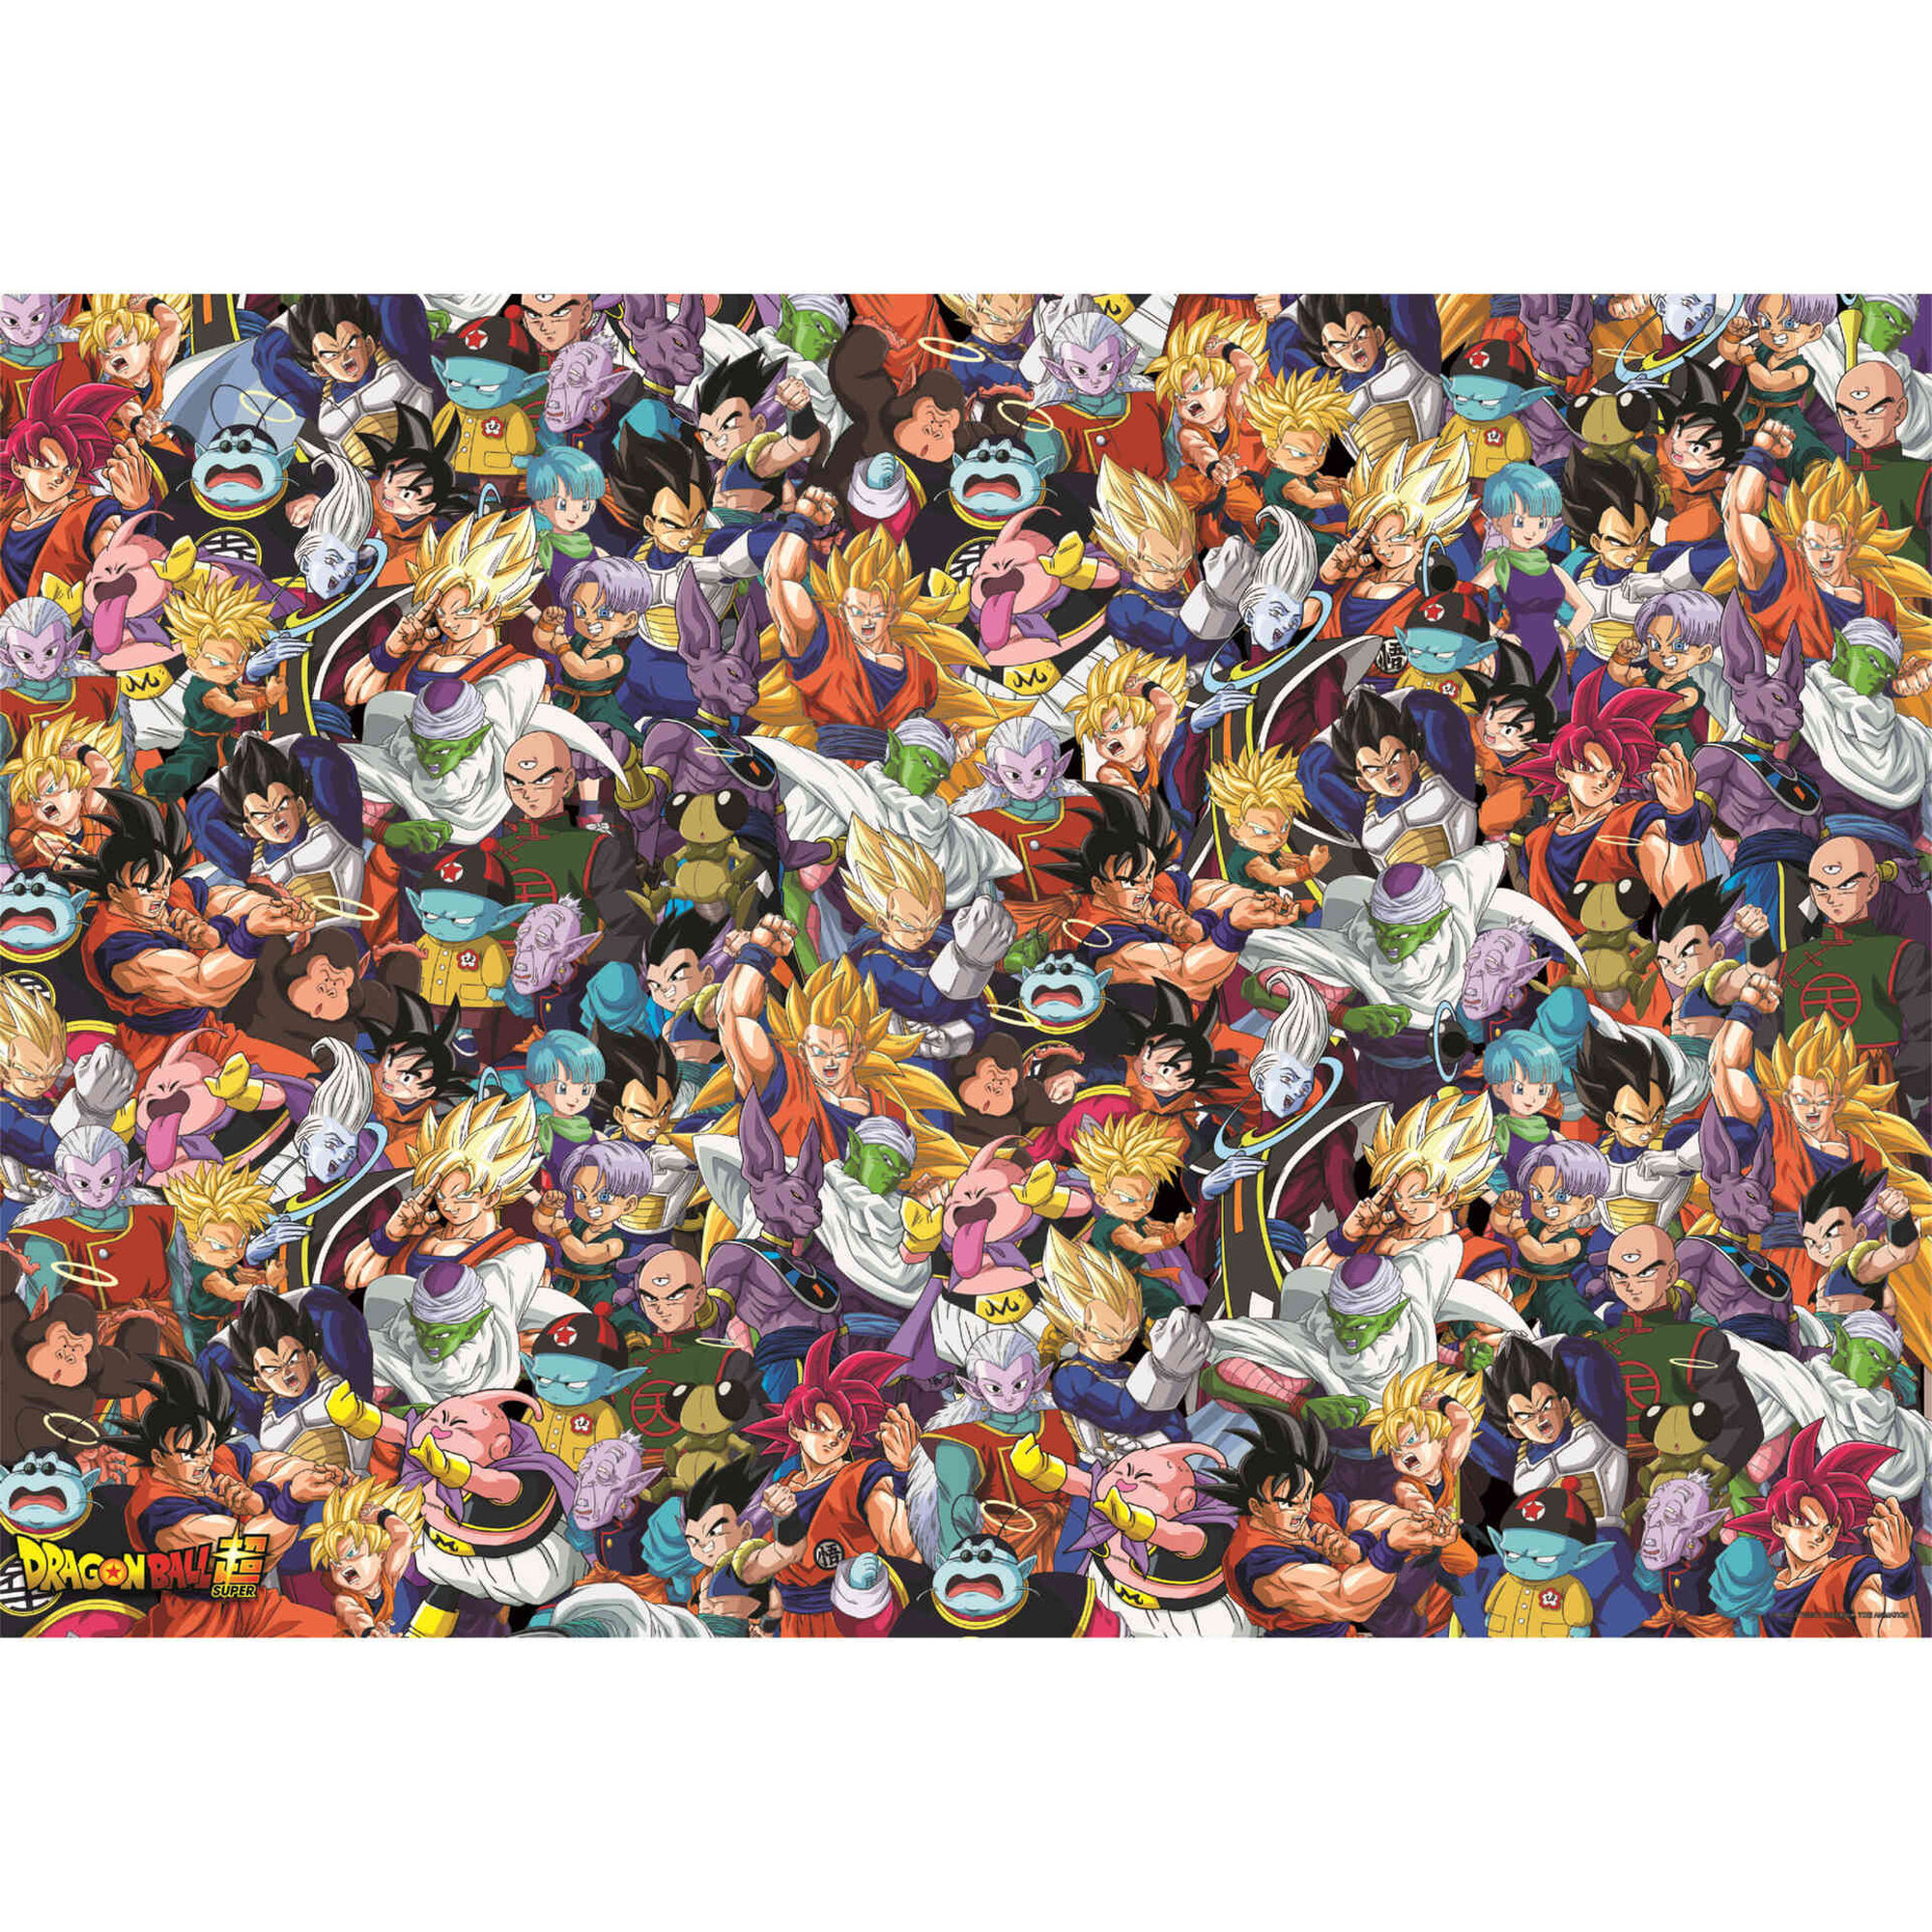 Puzzle Dragon Ball Super, 500 peças